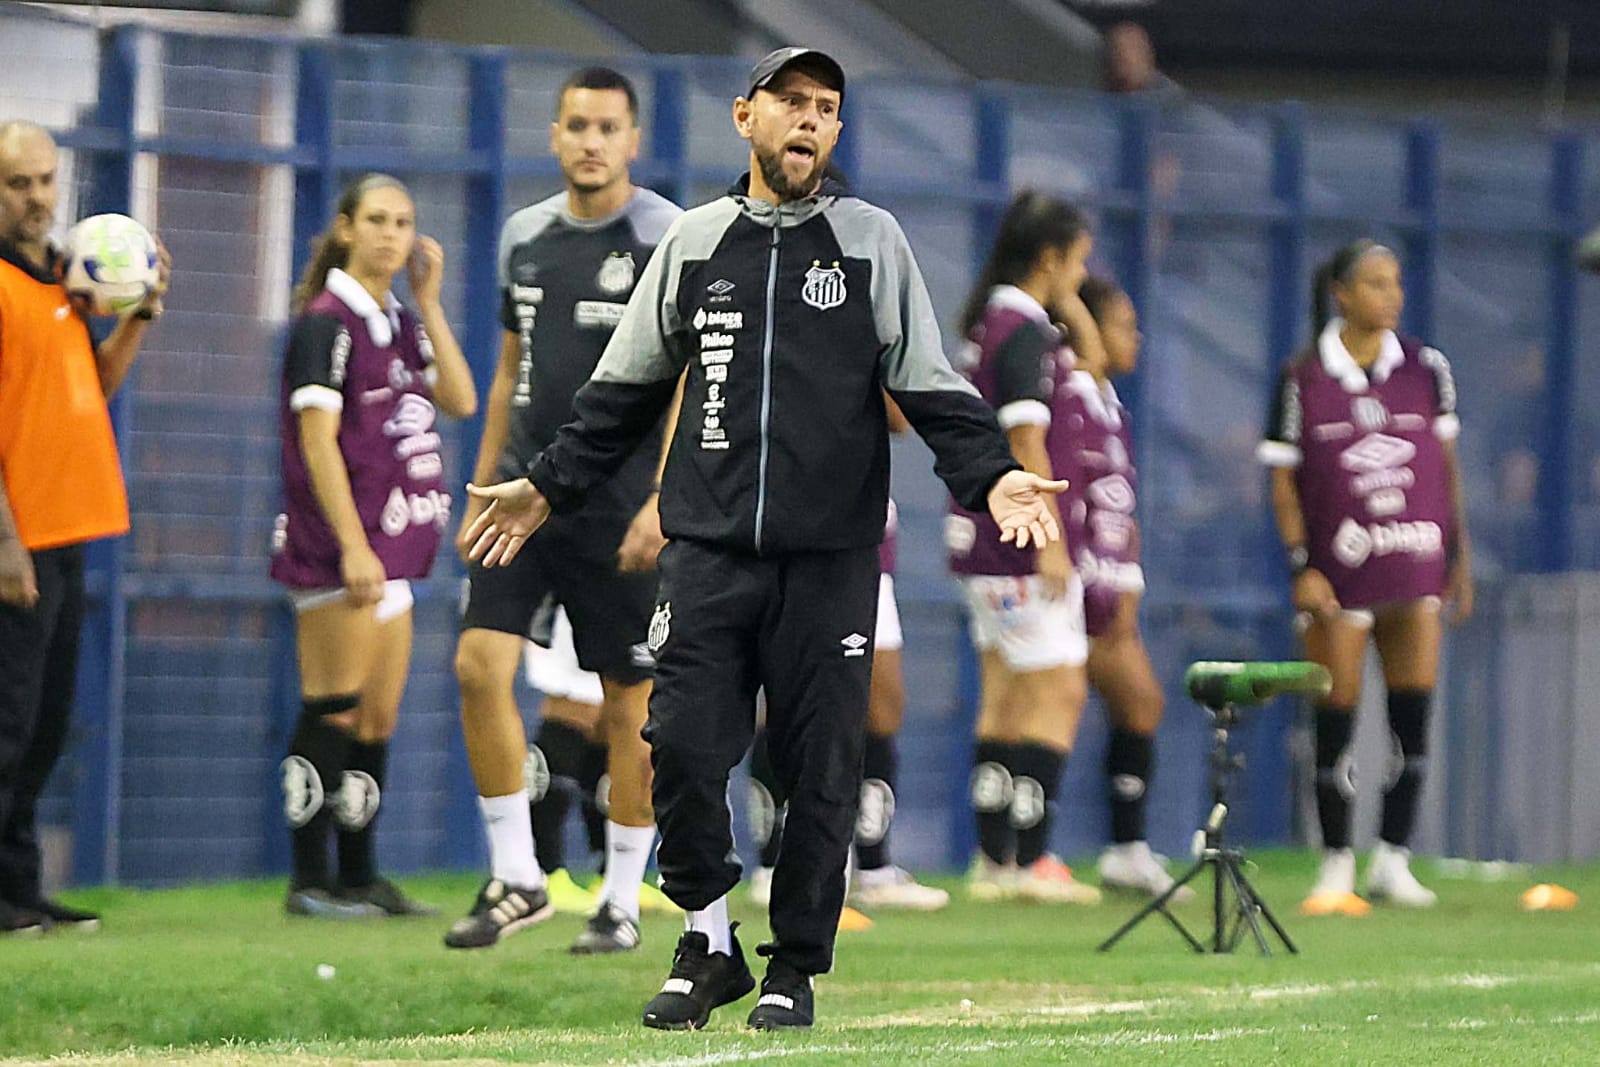 Kleiton Lima (Fotos : Pedro Ernesto Guerra Azevedo/Santos FC)